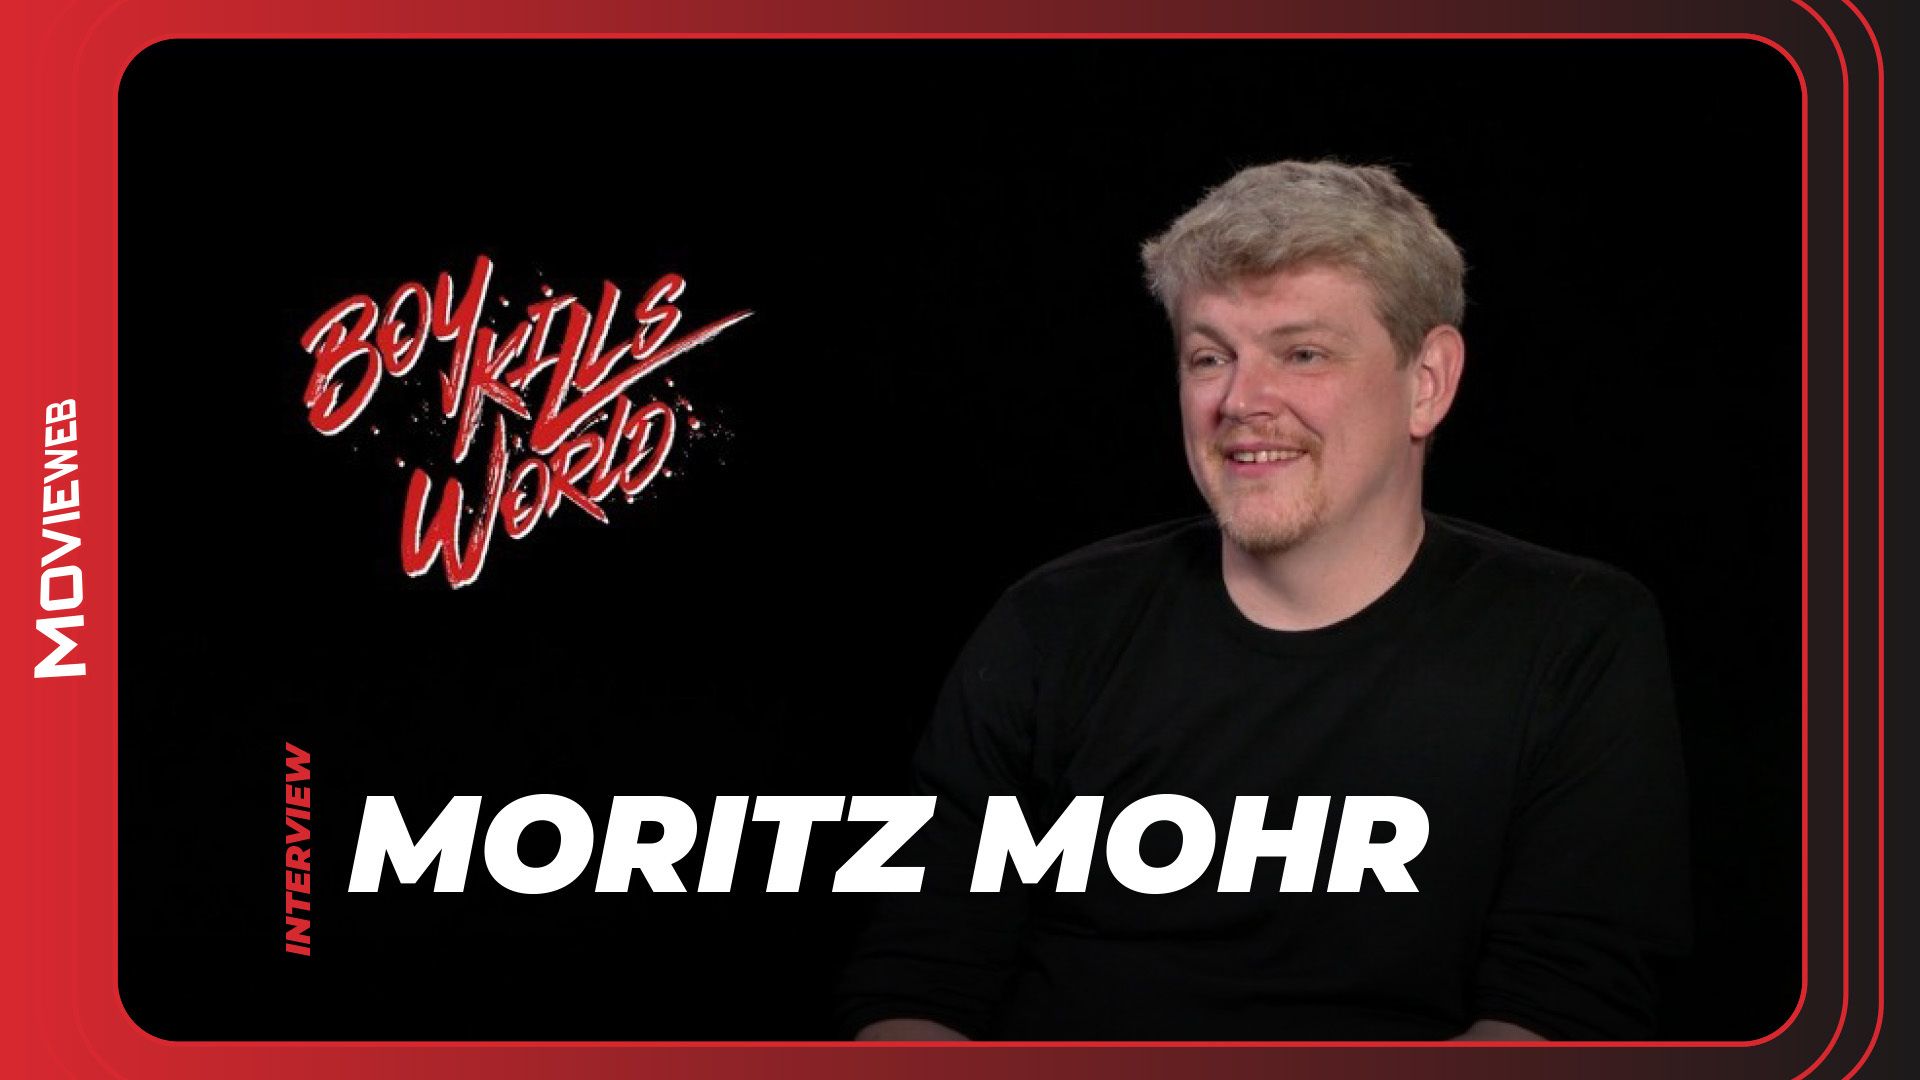 Boy Kills World - Moritz Mohr